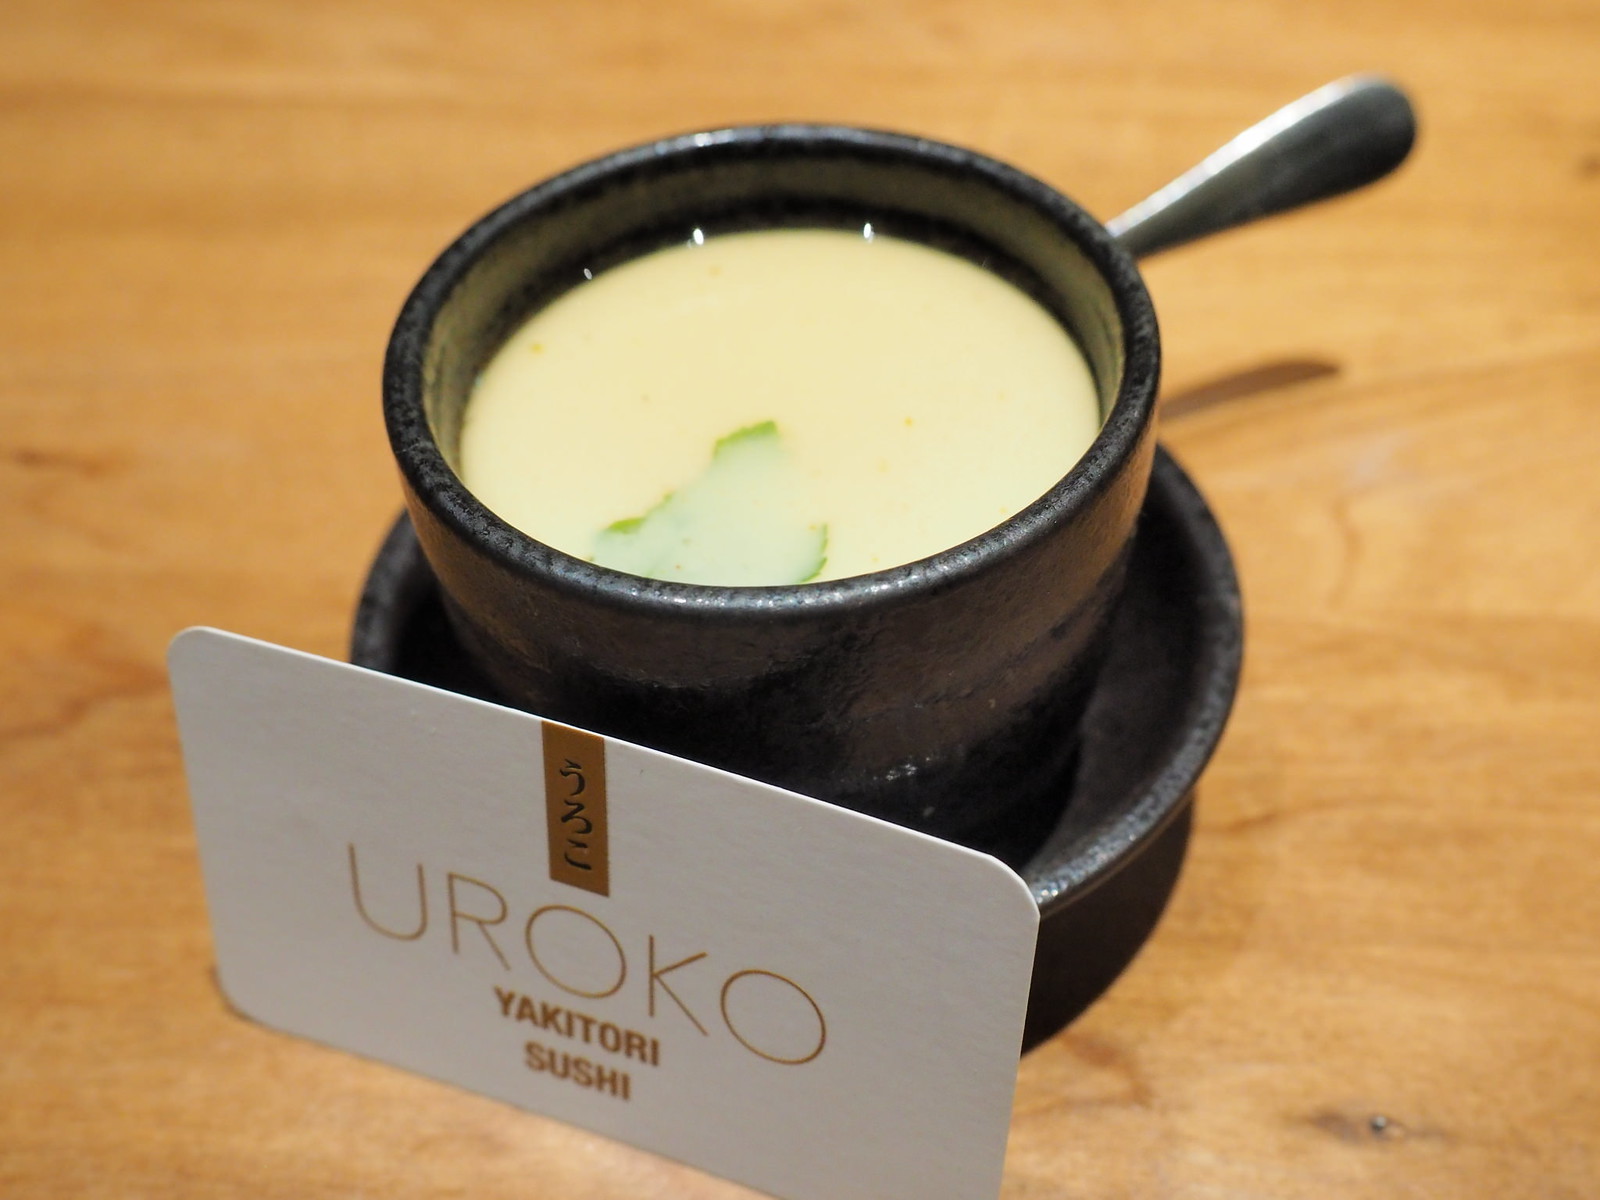 Chawanmushi and Uroko Japanese Cuisine's name card